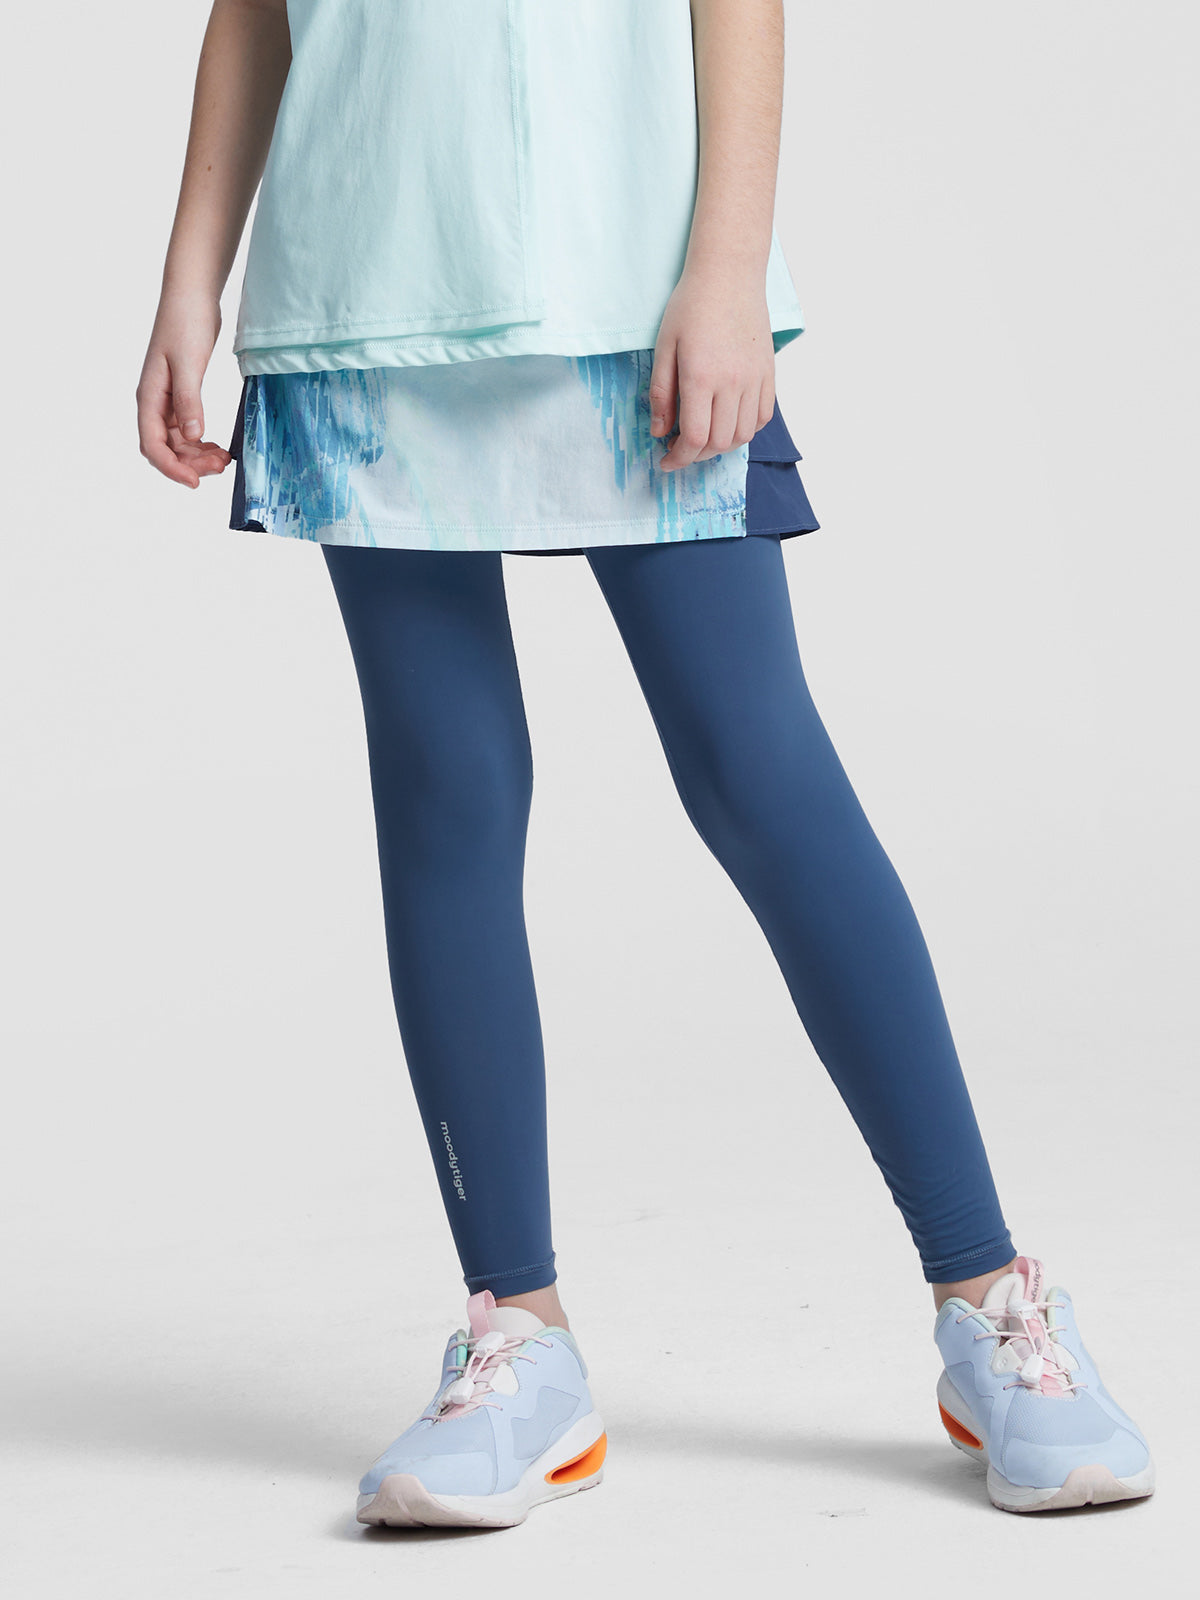 BREEZY Color Block Skirt with Leggings